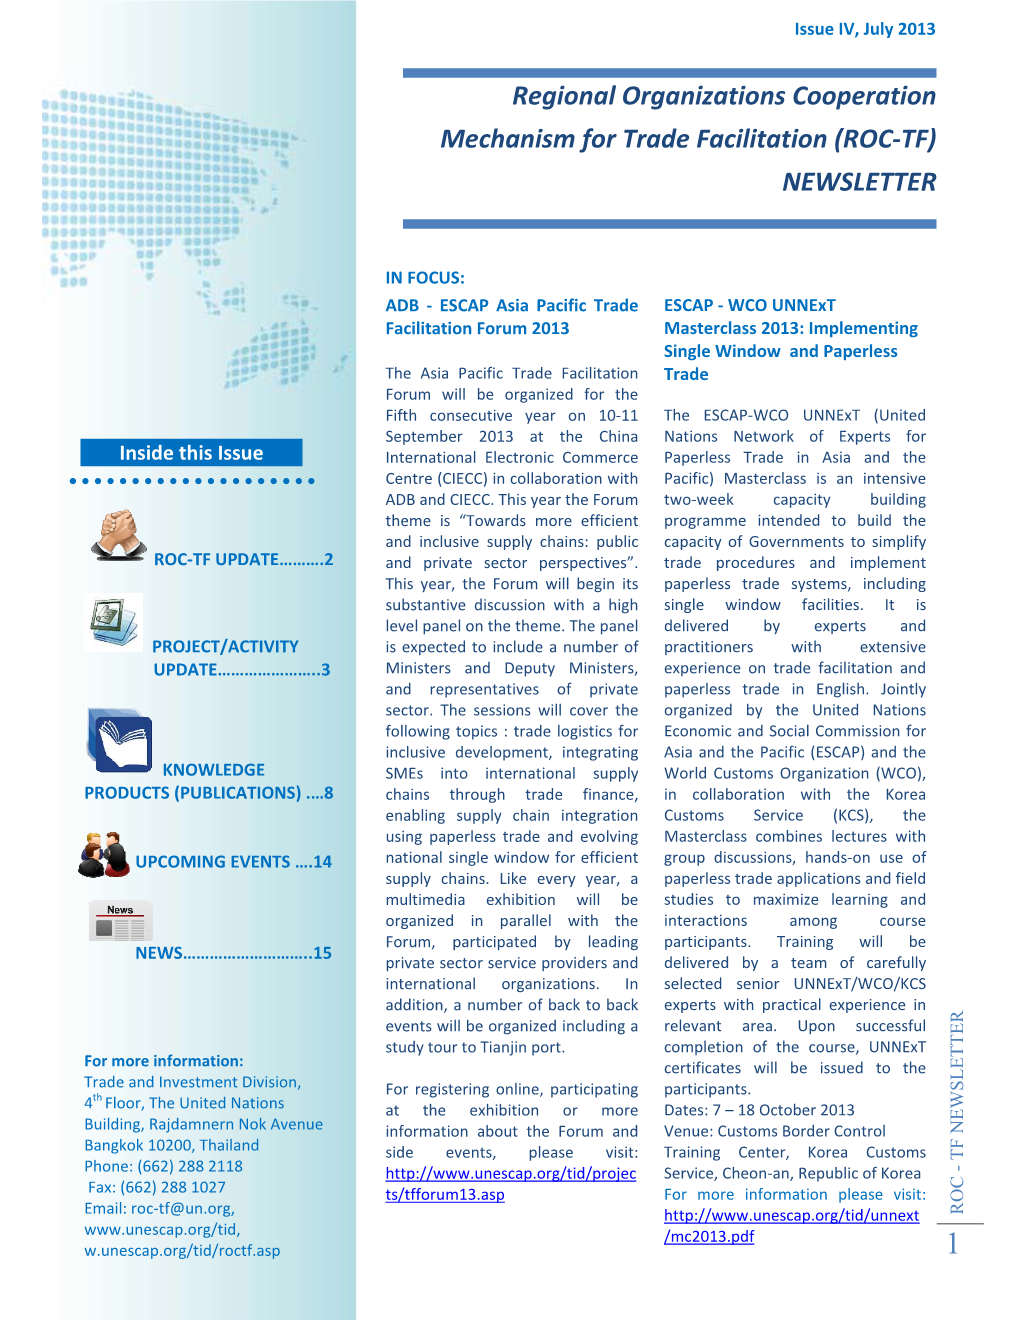 Regional Organizations Cooperation Mechanism for Trade Facilitation (ROC-TF) NEWSLETTER